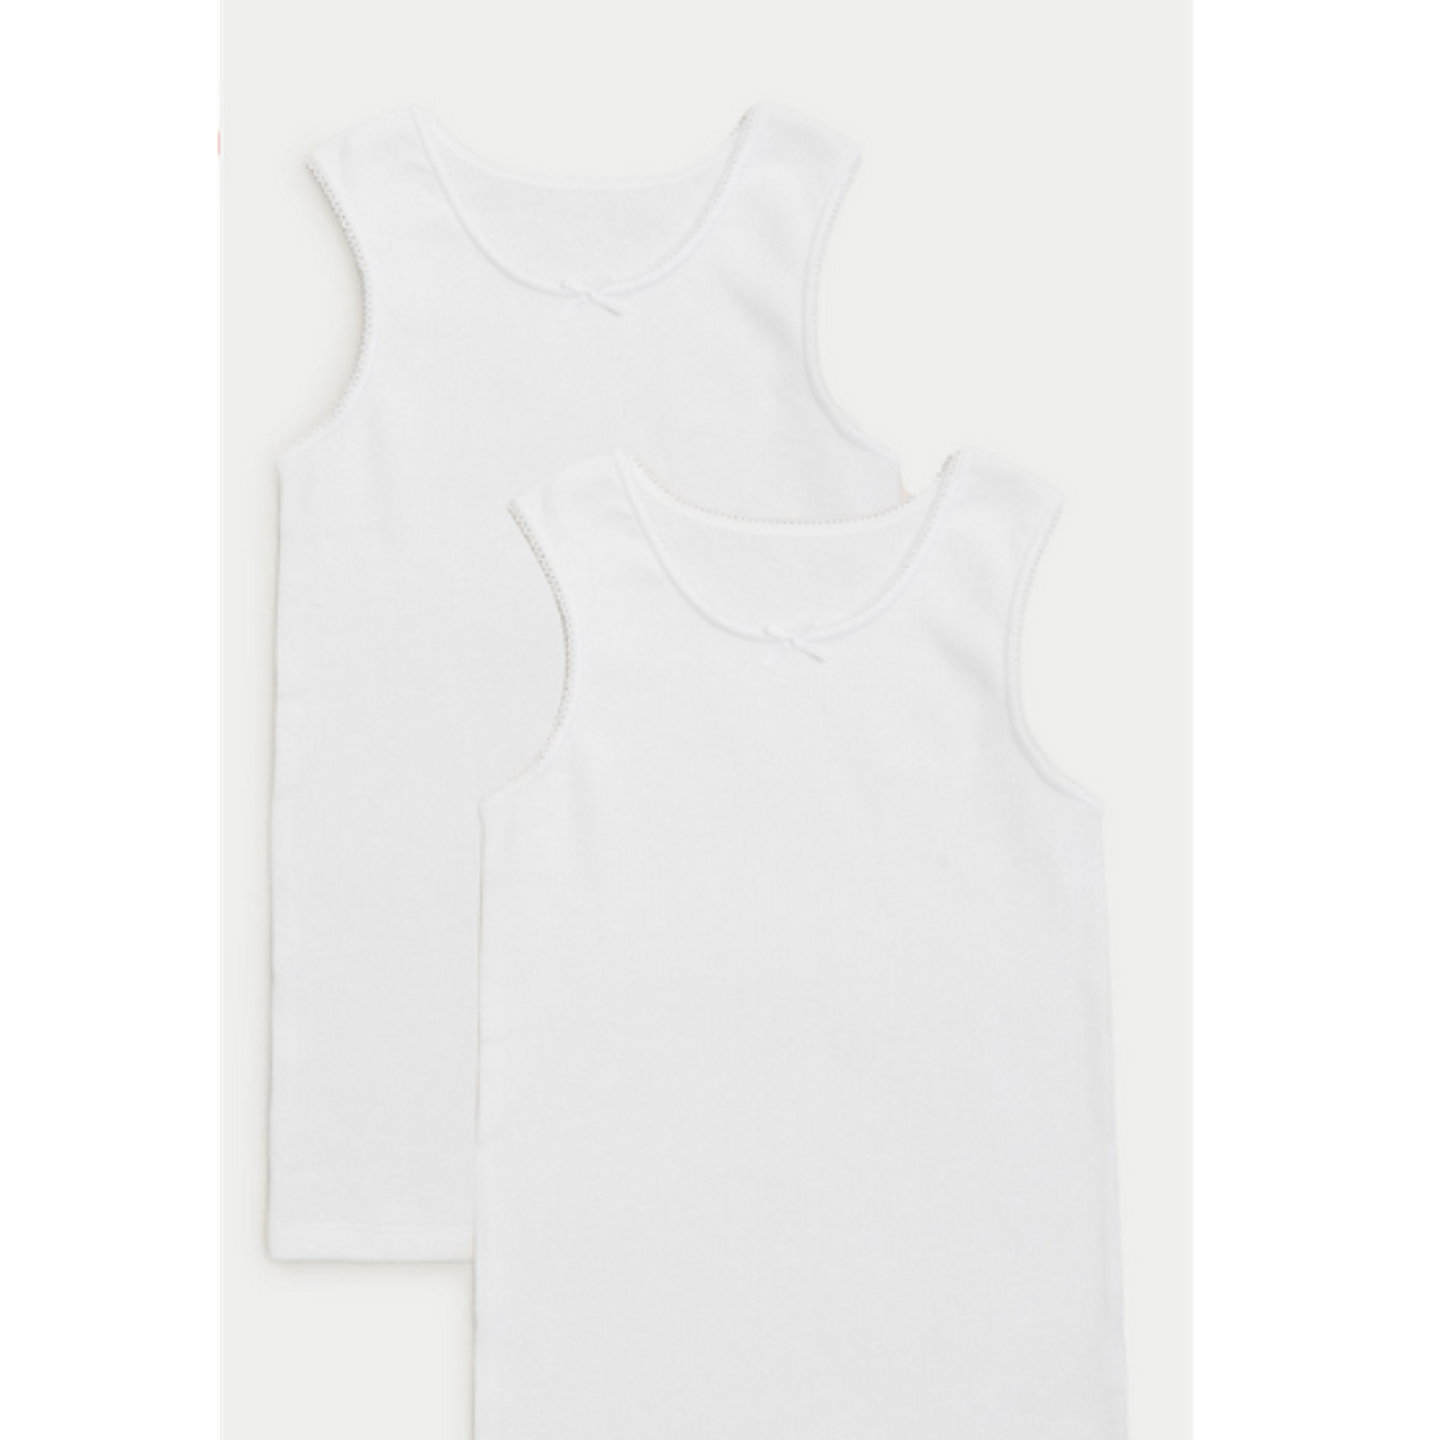 John Lewis Kids' Thermal Long Sleeve Top, Pack of 2, White at John Lewis &  Partners